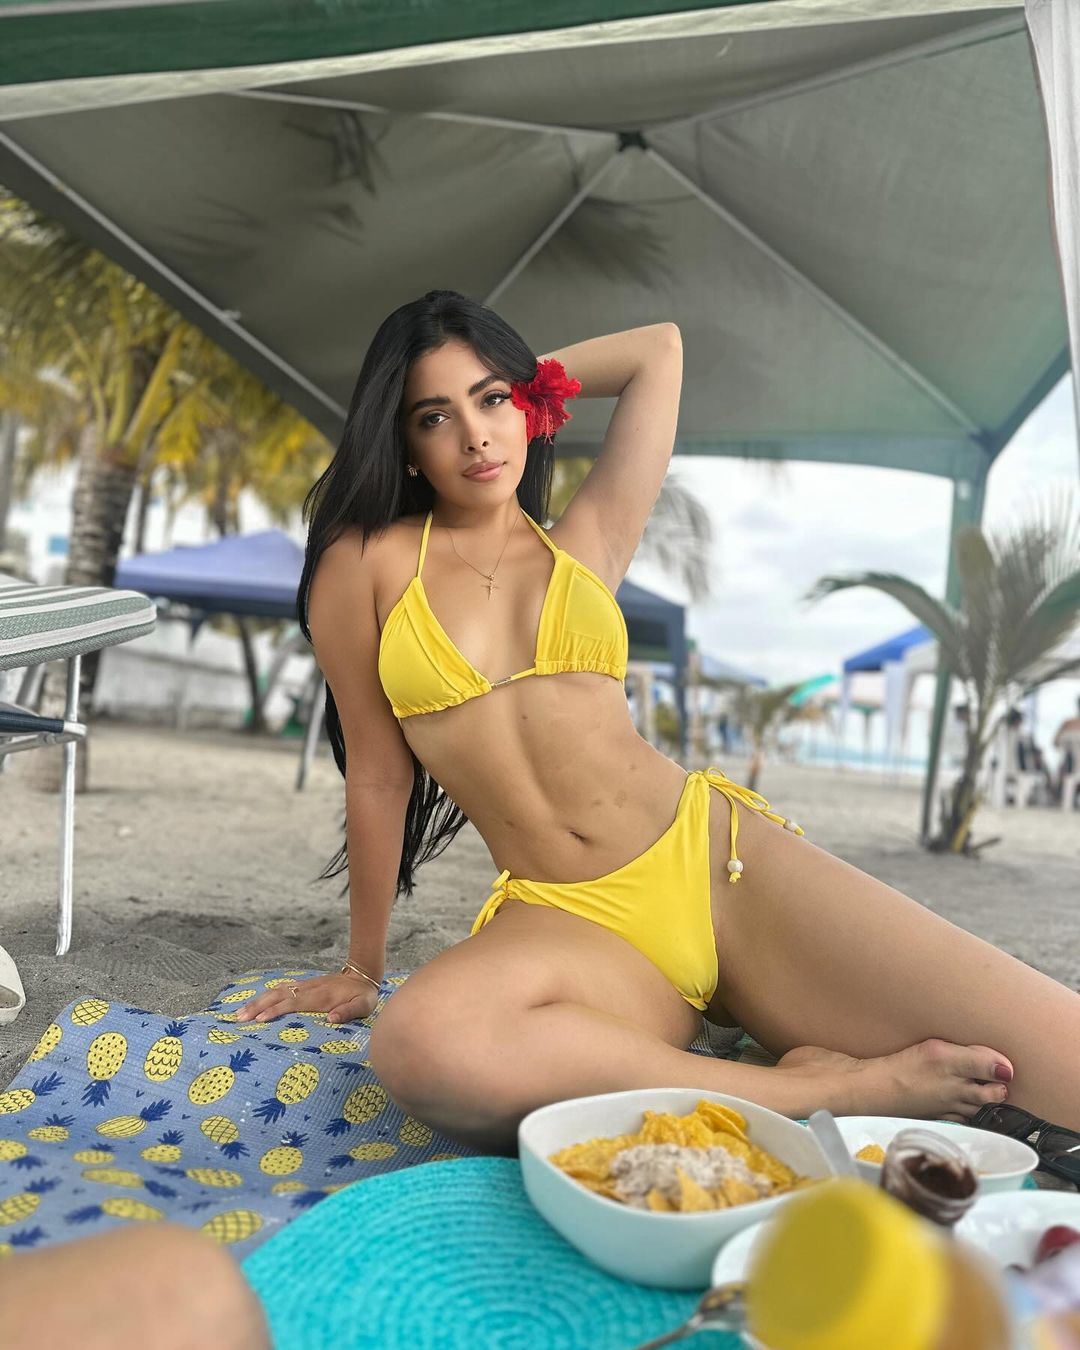 Diễn biến mới vụ thí sinh Hoa hậu Ecuador bị bắn chết